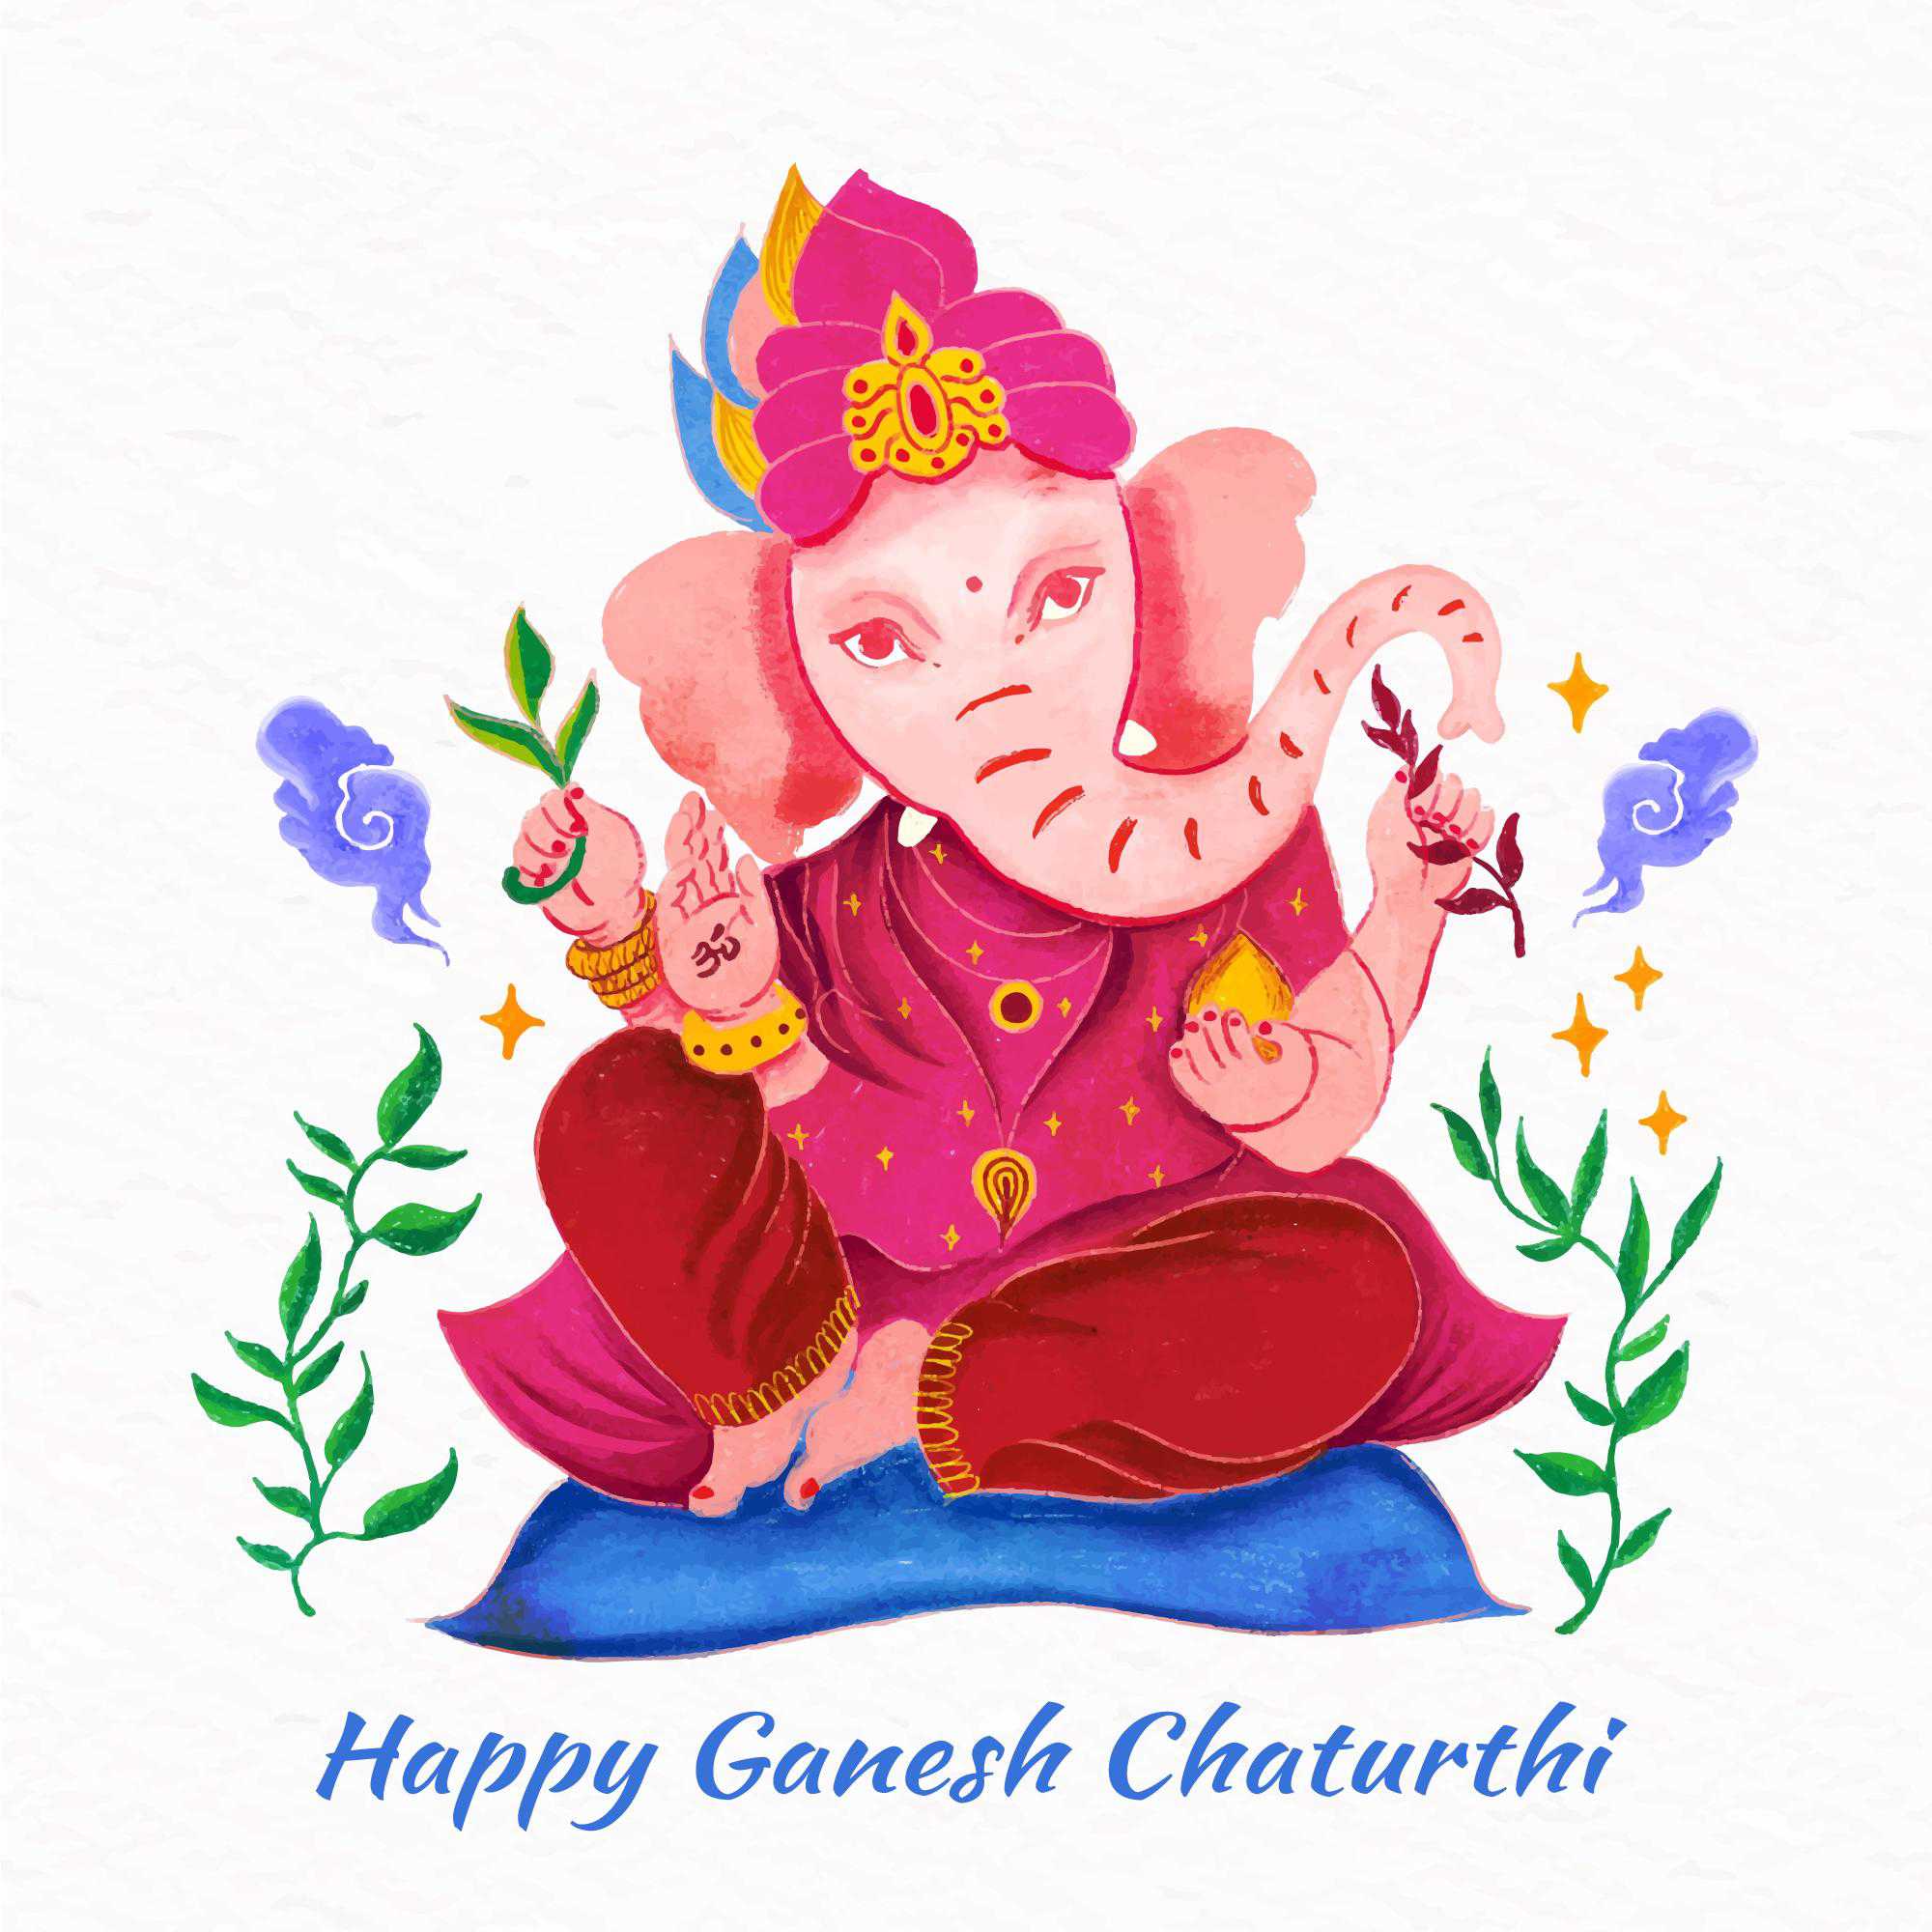 Ganesh Chaturthi pics